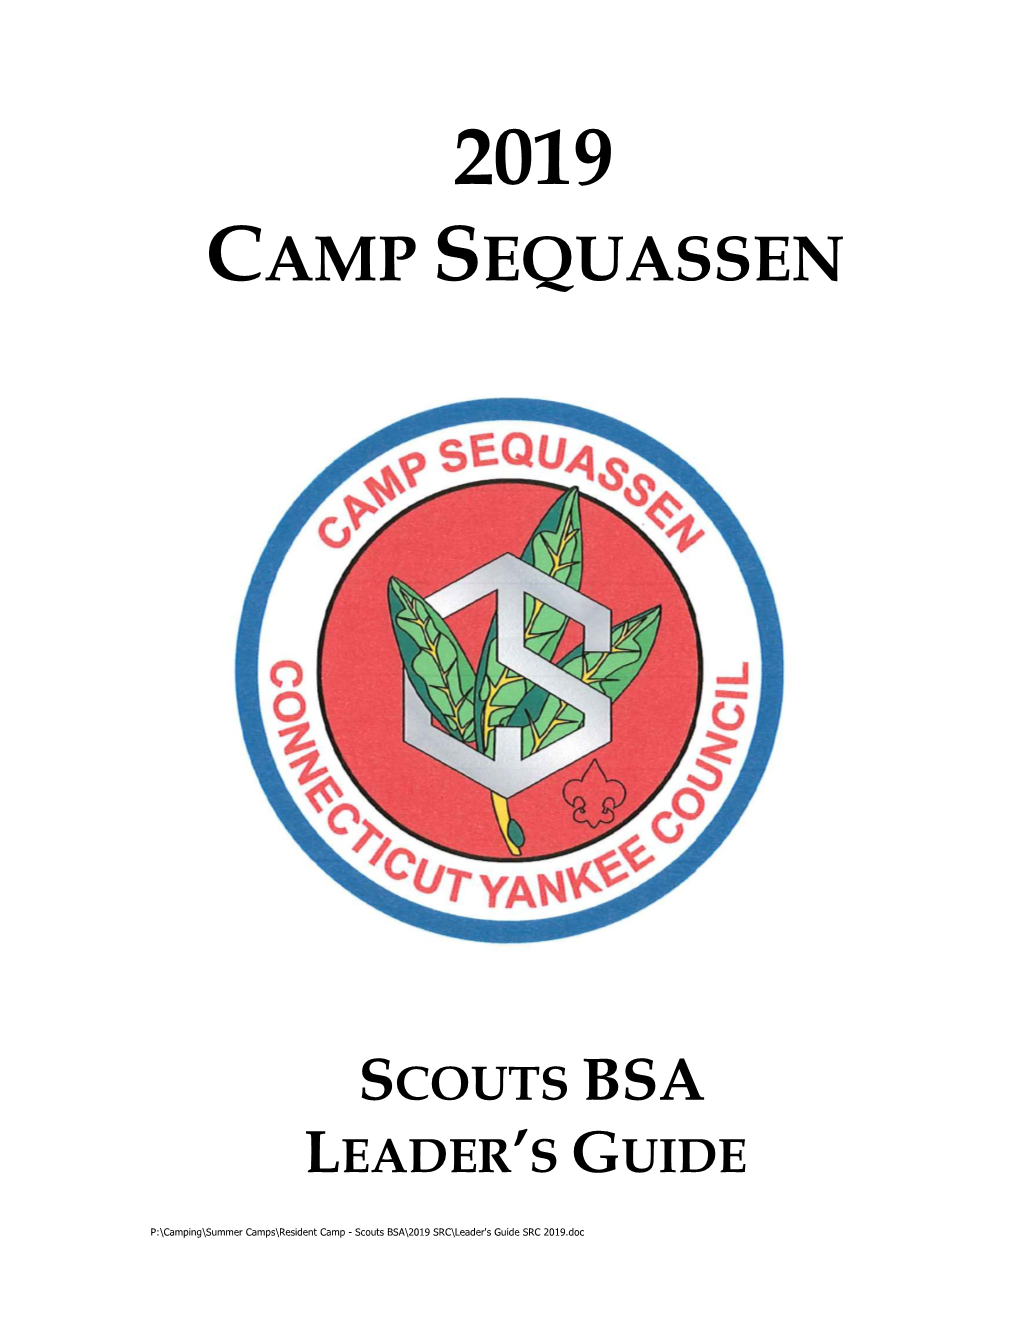 Camp Sequassen